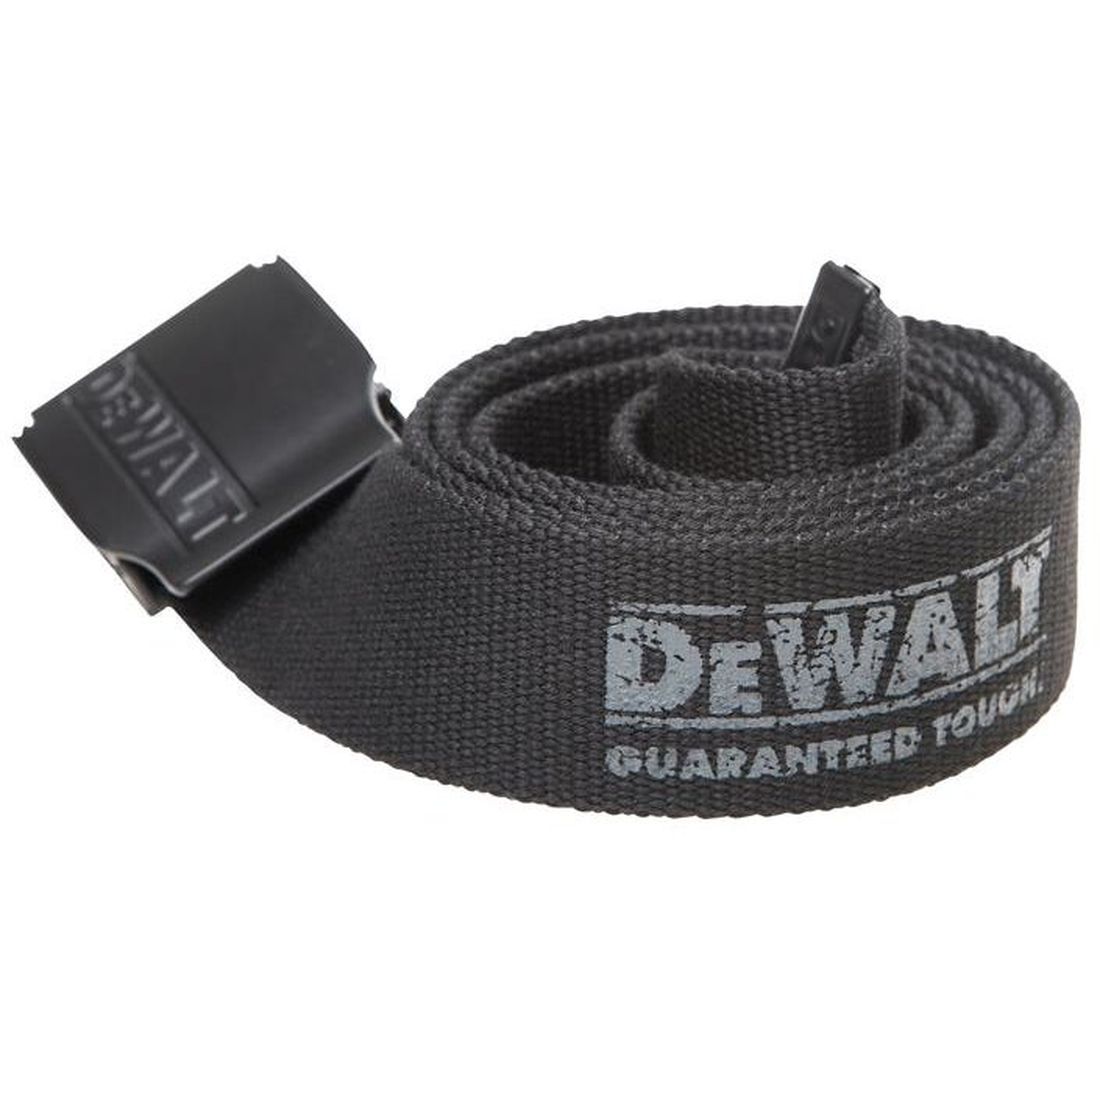 DEWALT Pro Belt                          